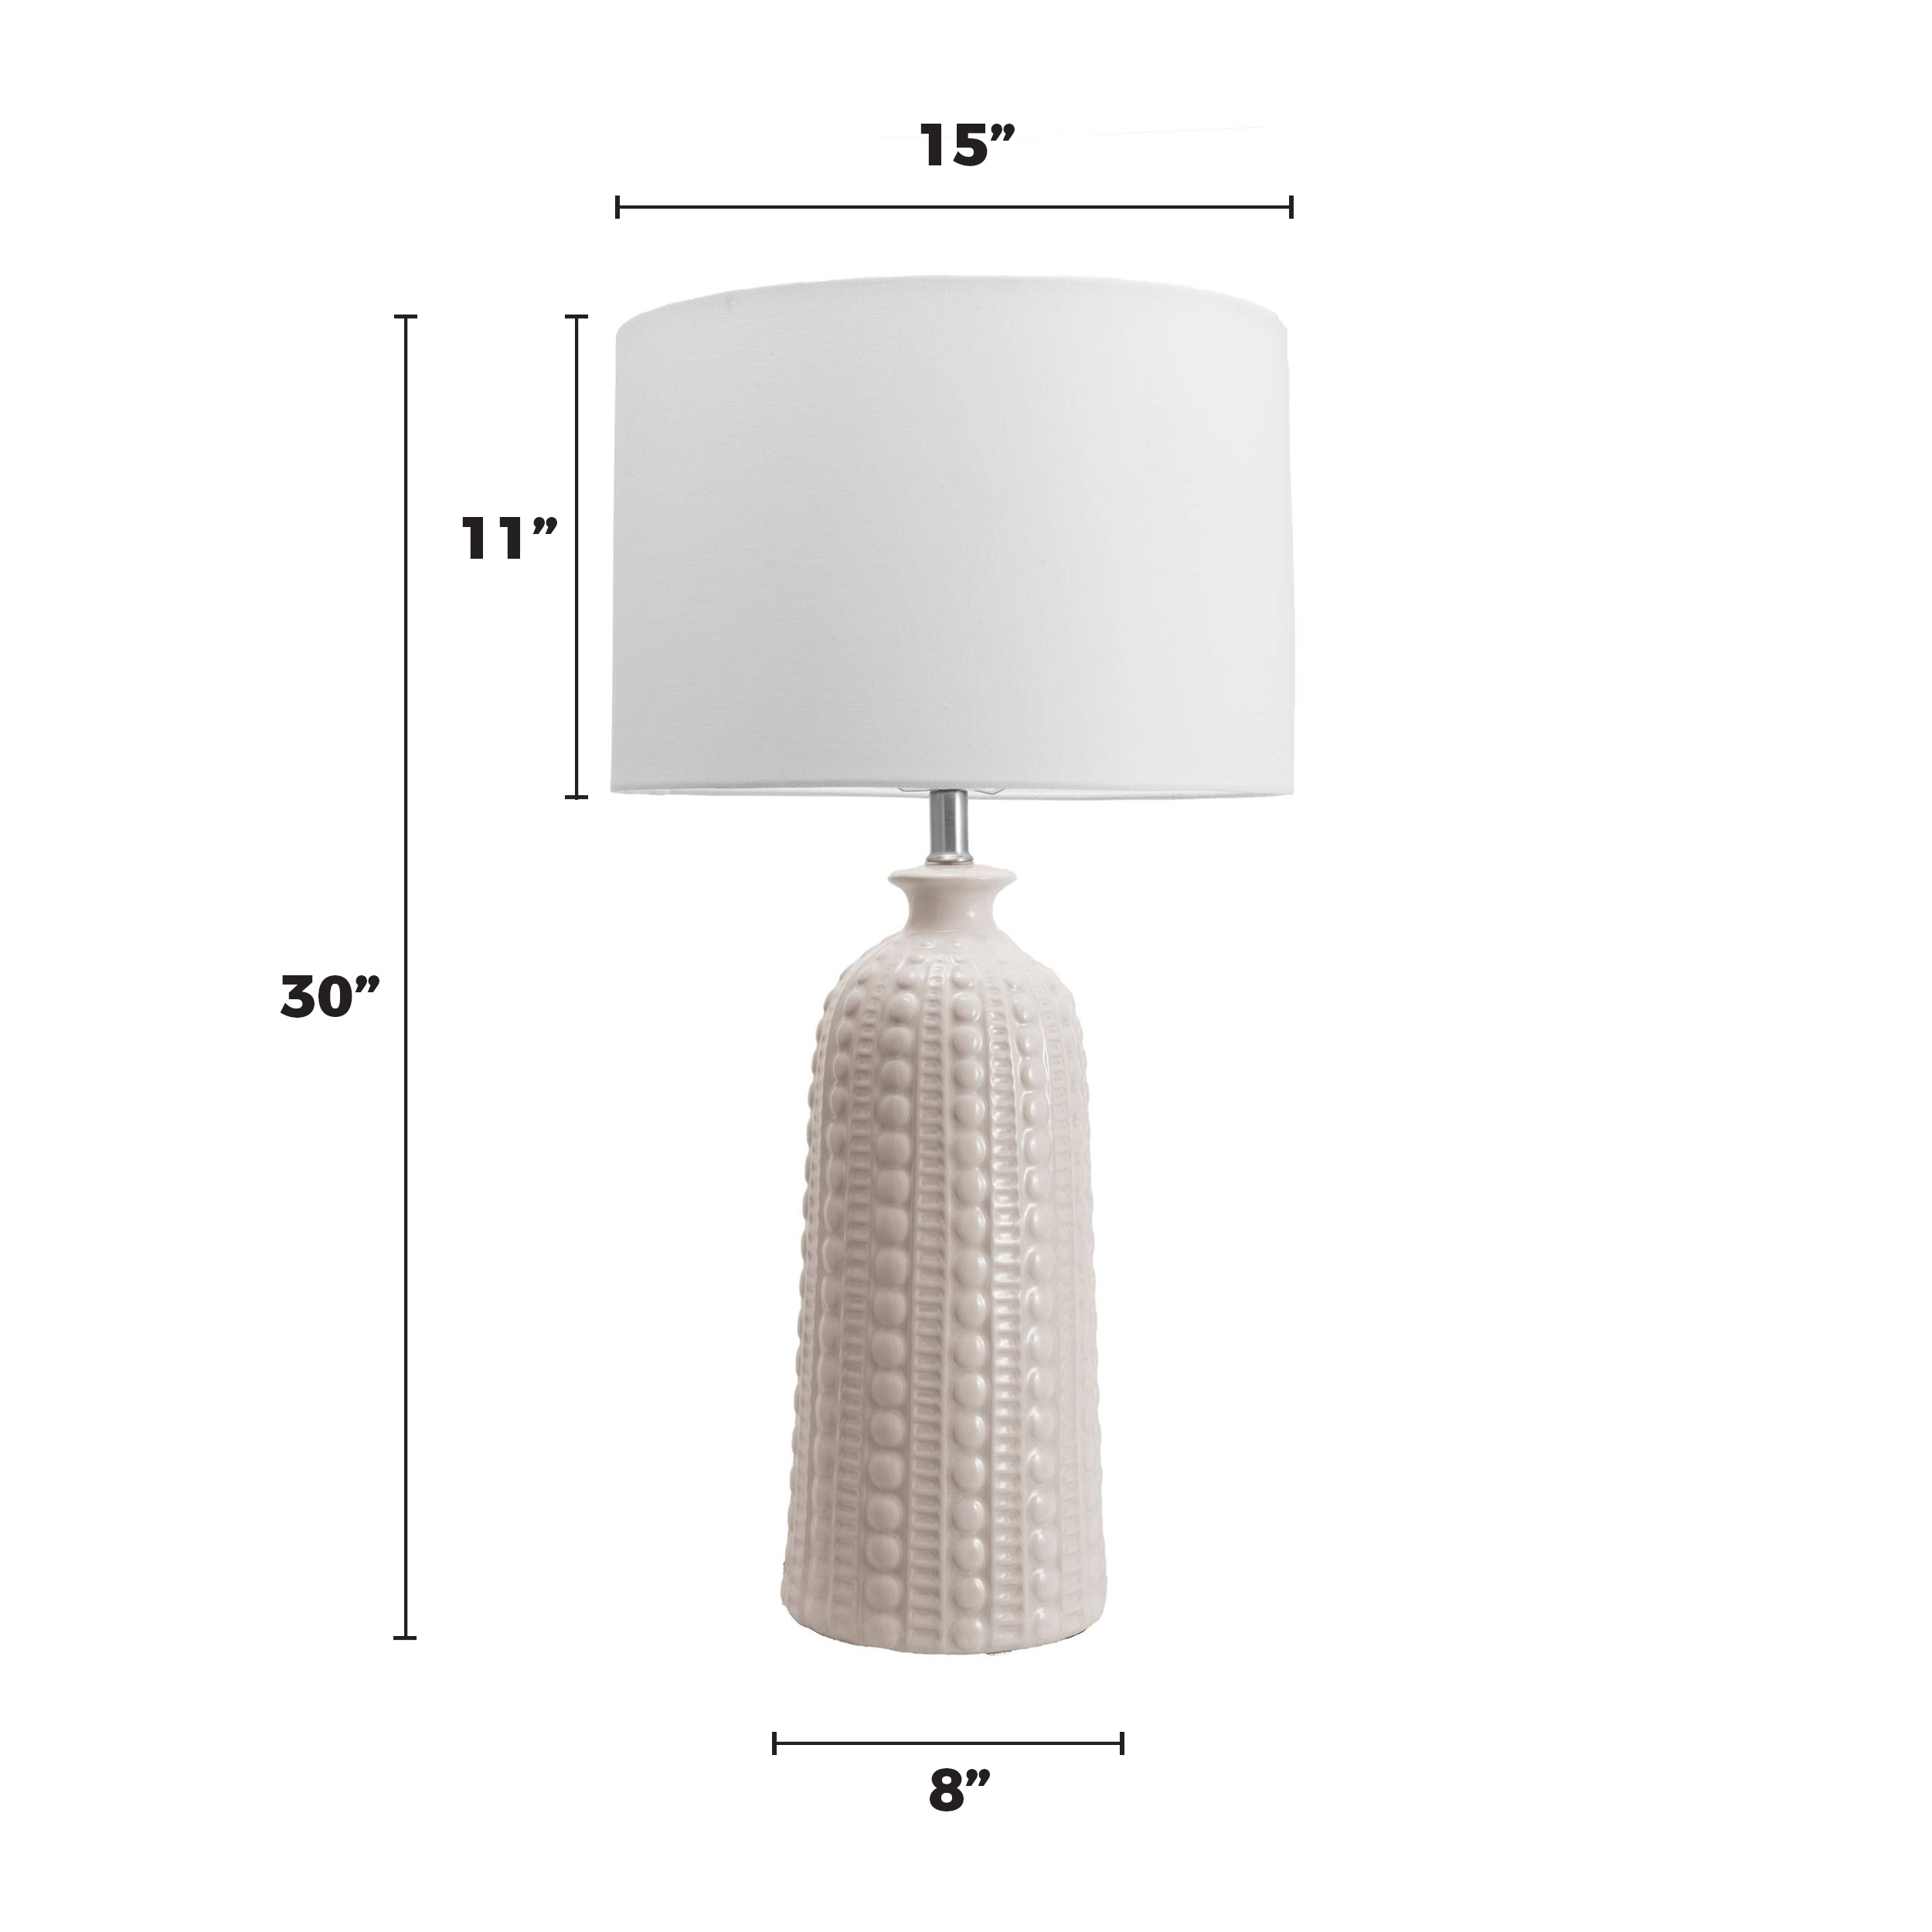 Flint Ceramic Table Lamp, 30" - Image 2